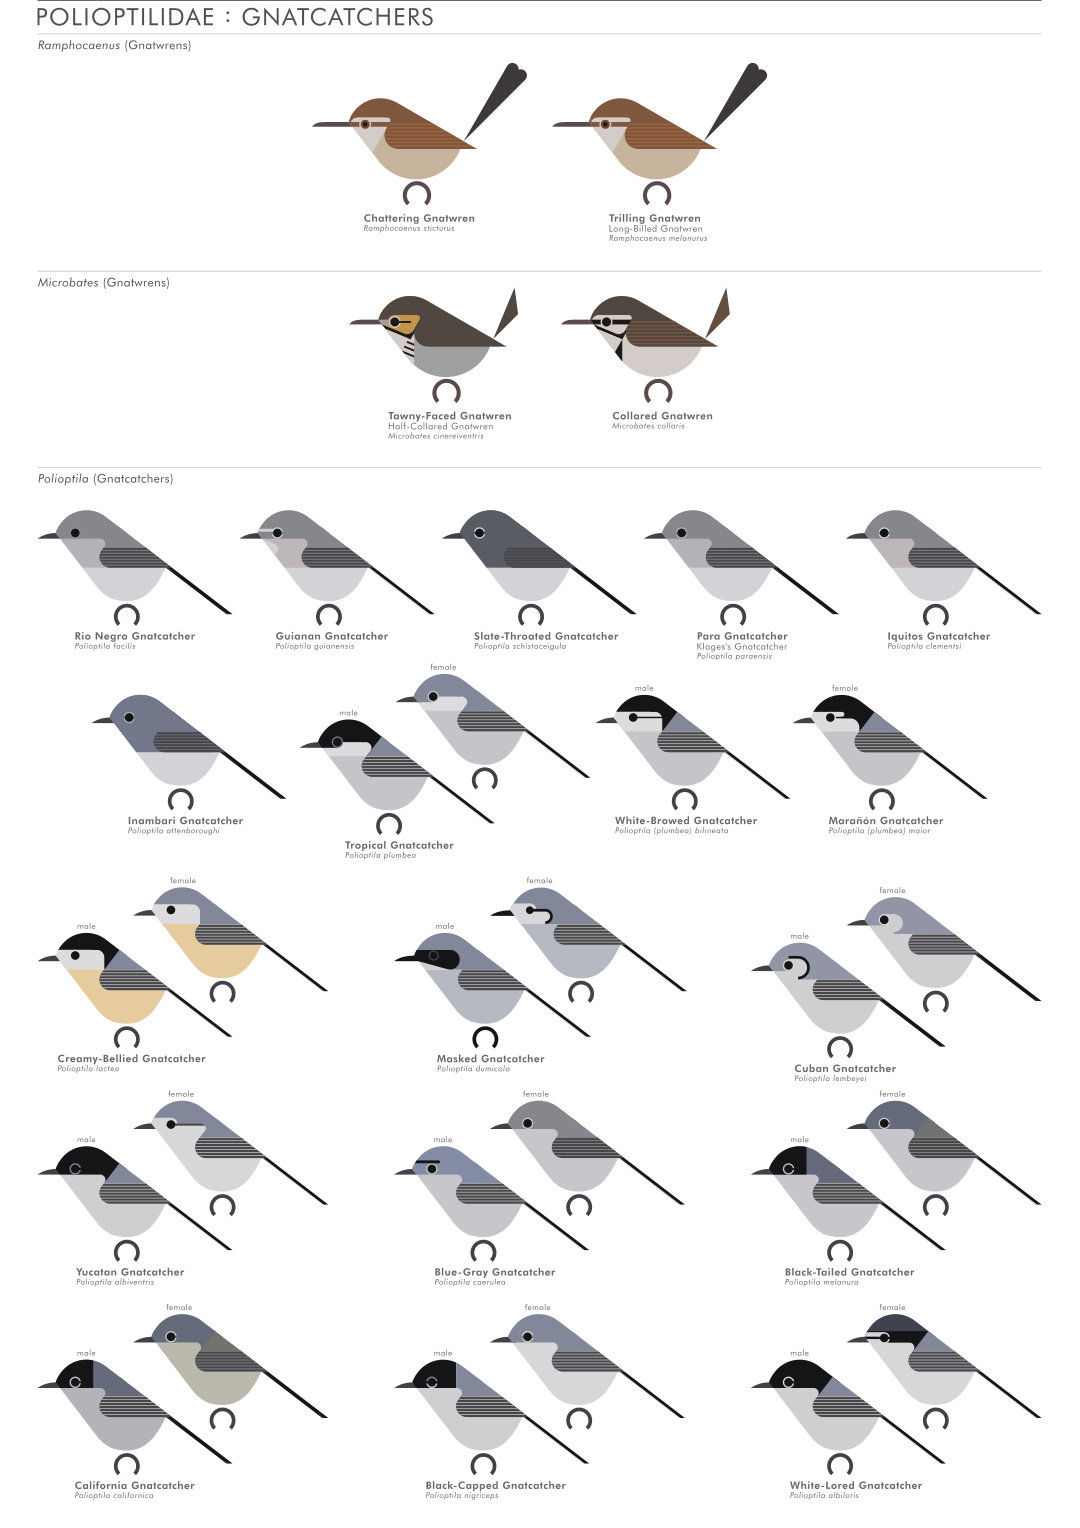 scott partridge - AVE - avian vector encyclopedia - gnatcatchers - bird vector art